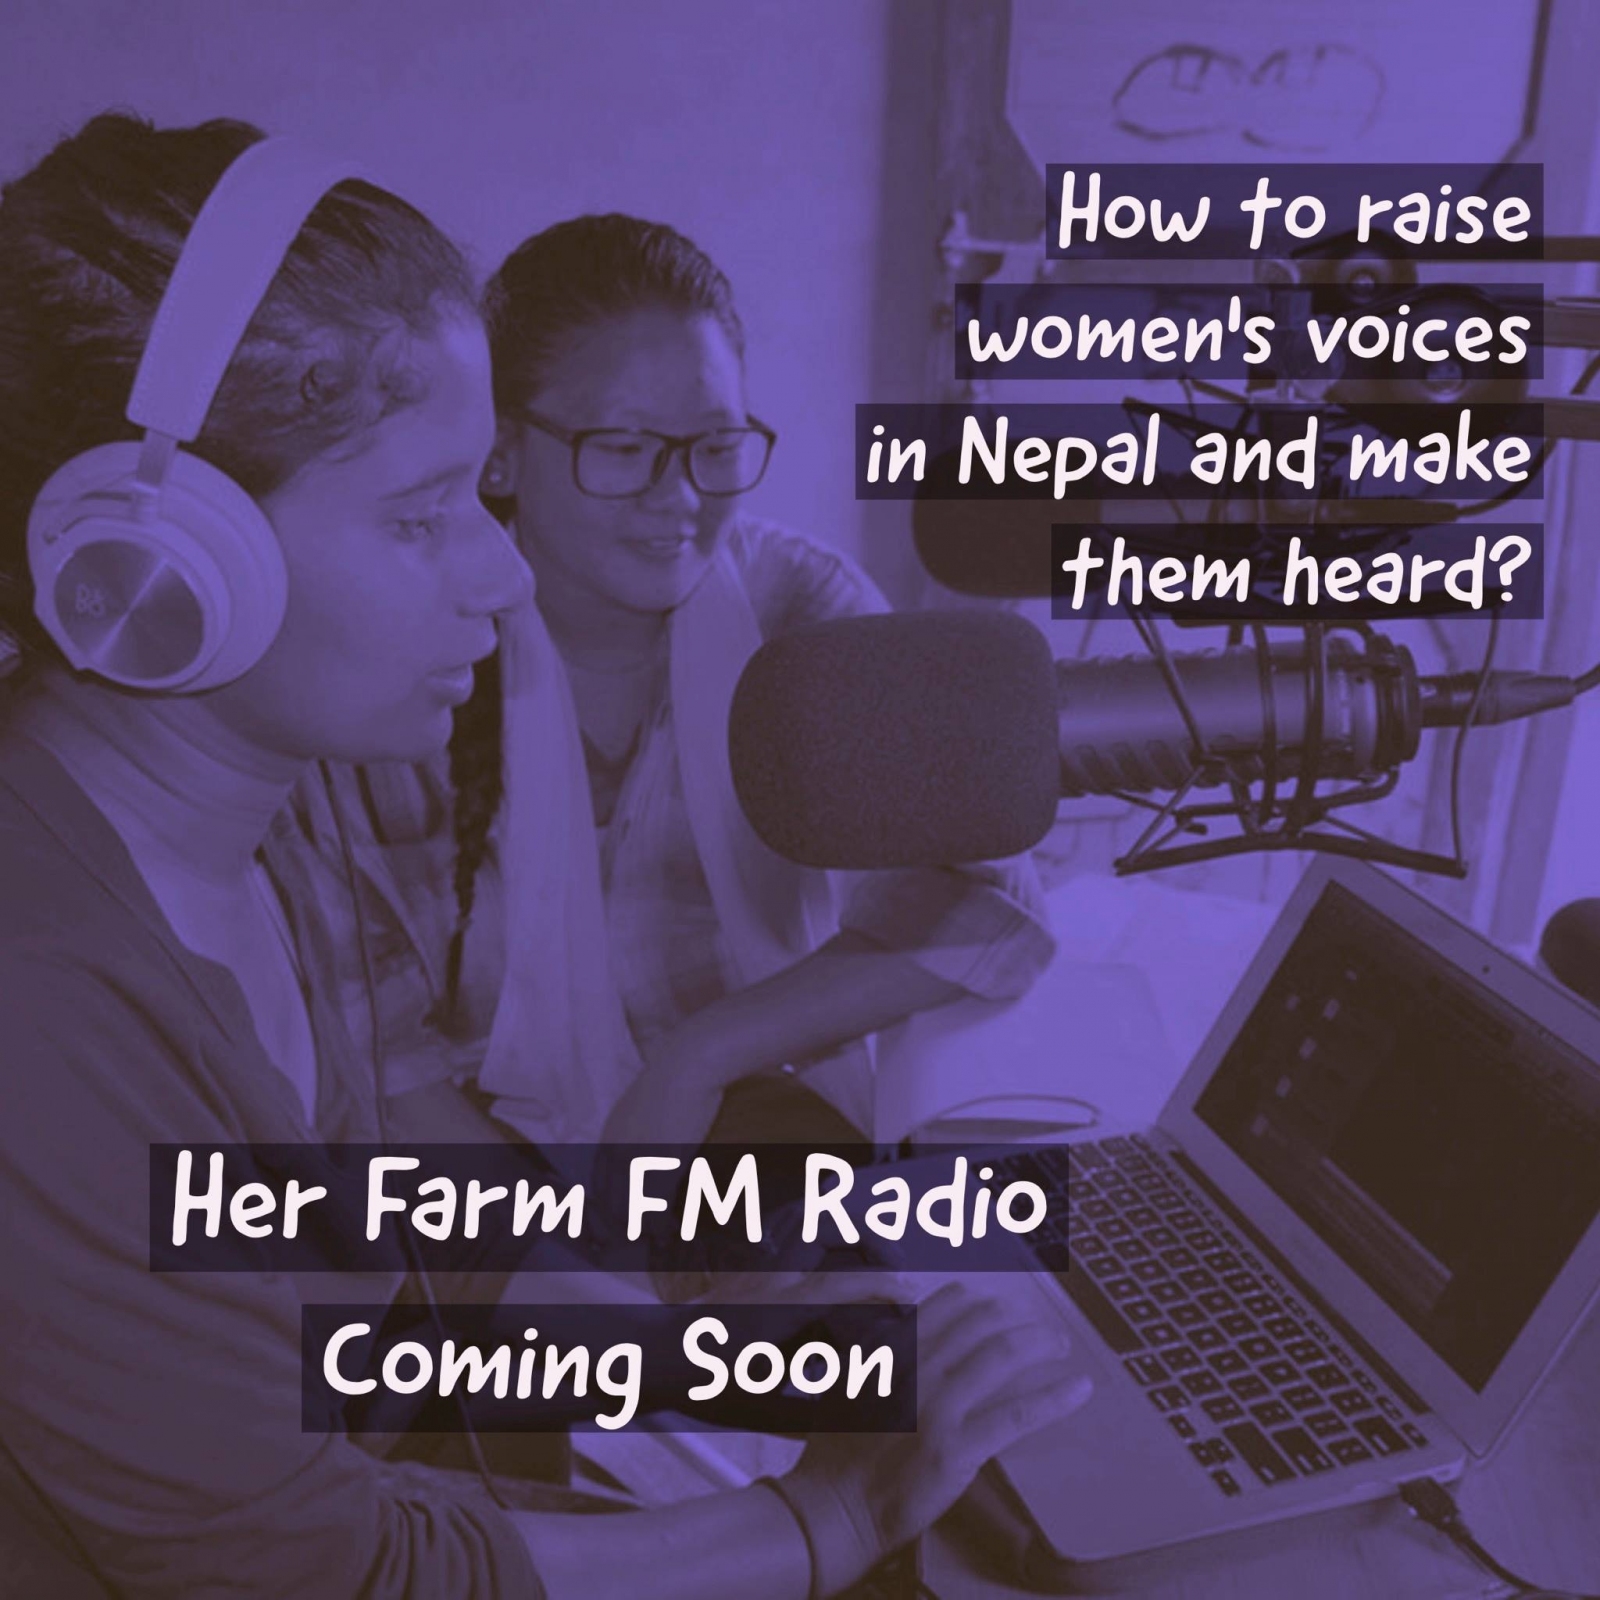 Her Farm FM Radio Coming Soon